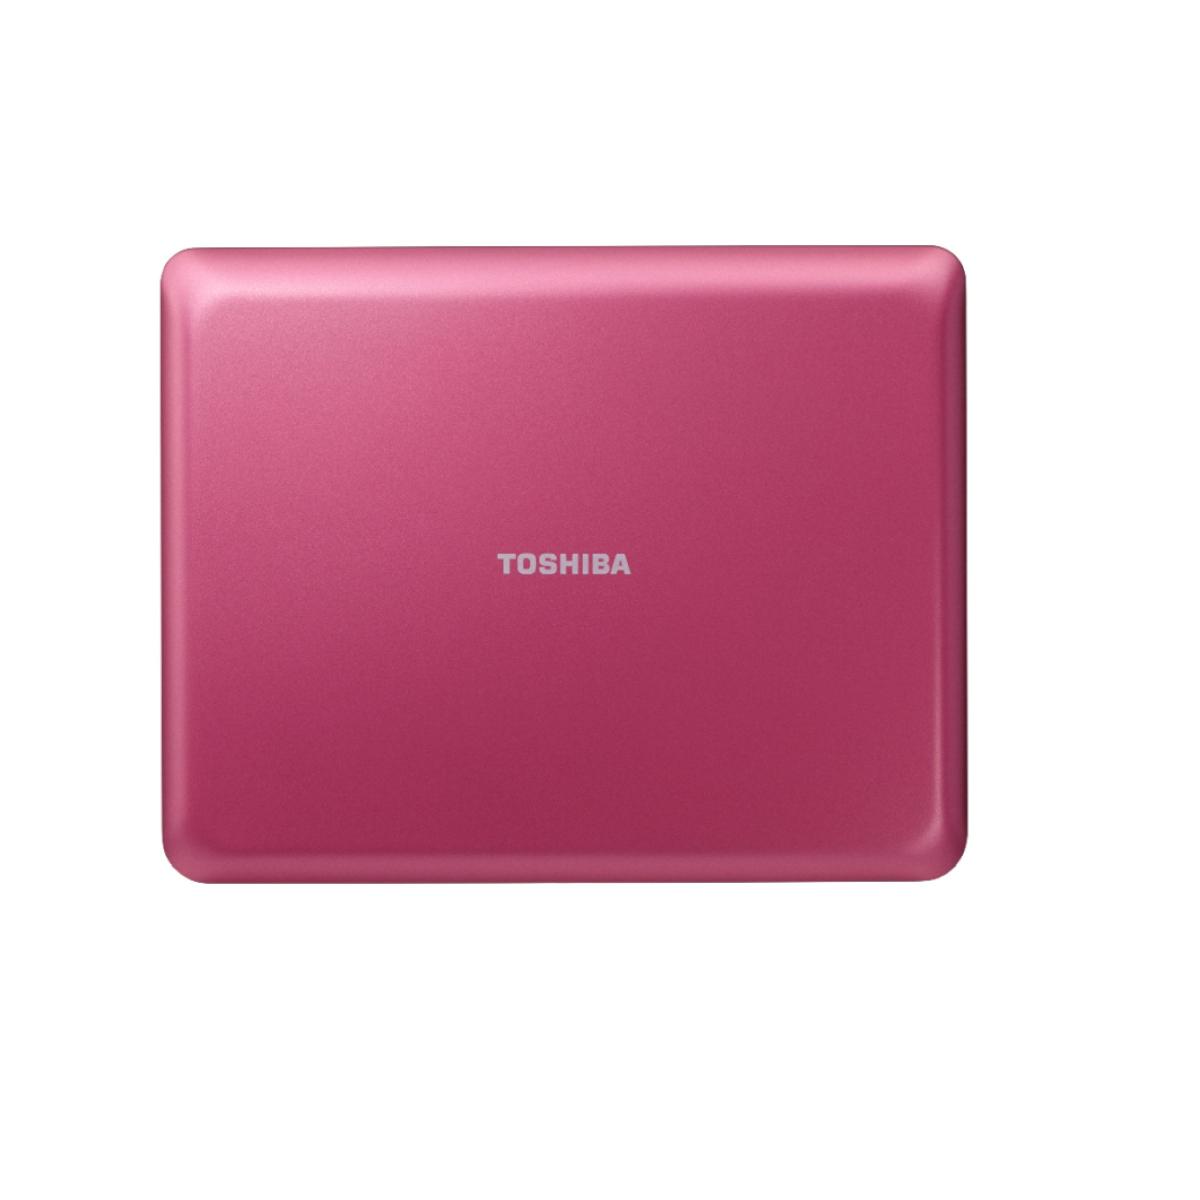 Toshiba Regza ポータブルDVDプレーヤー SD-P710SP